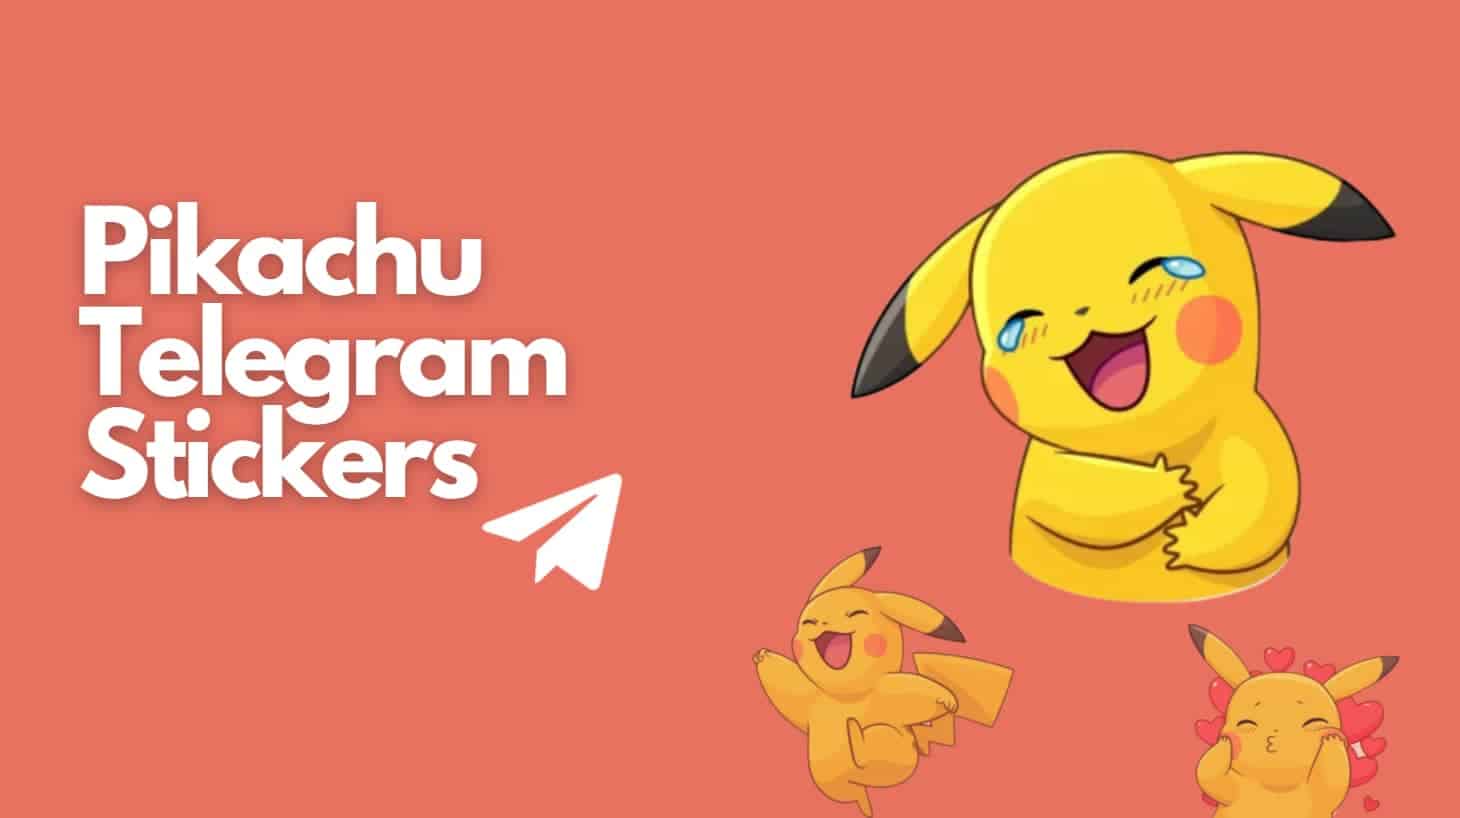 Pikachu Telegram Stickers